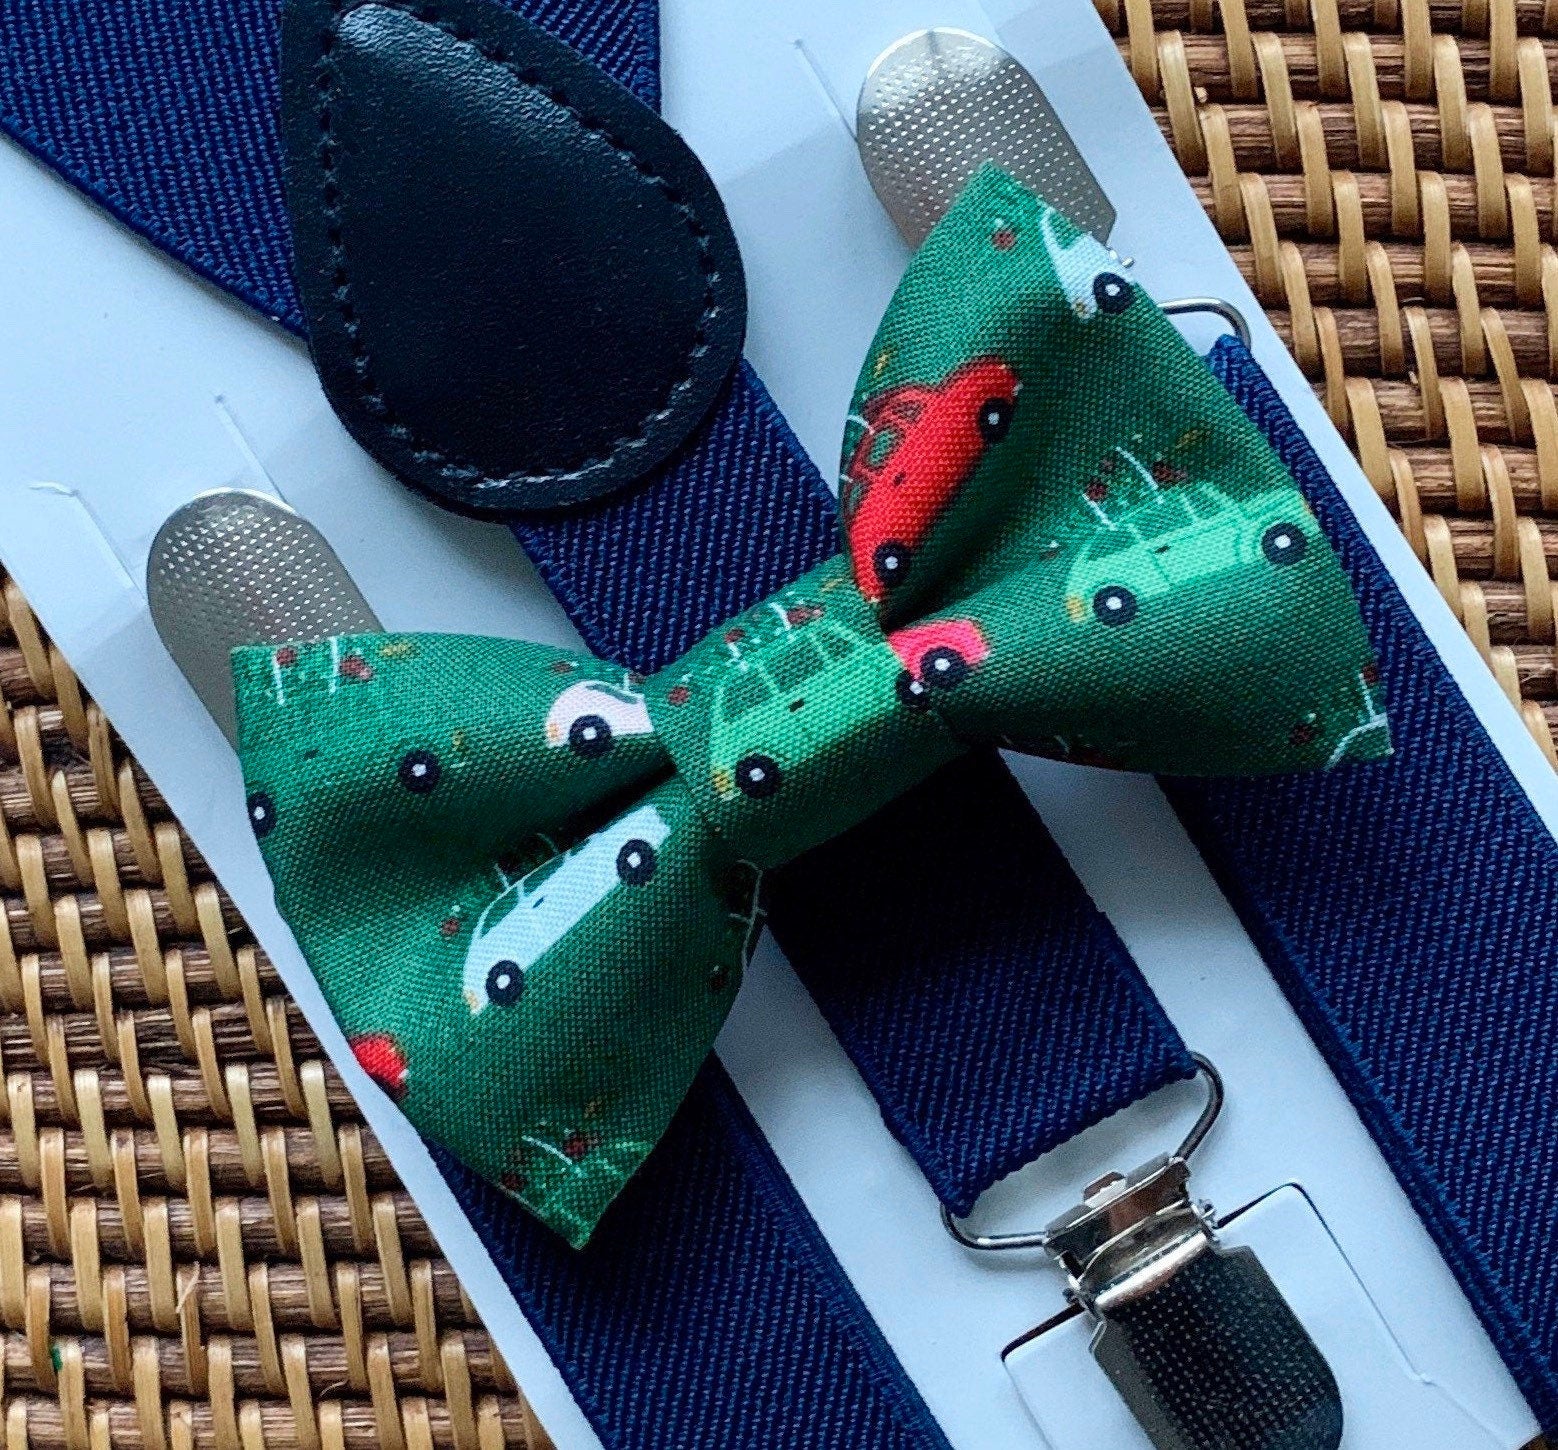 Green Christmas Tree Cars Bow Tie & Navy Suspenders Set